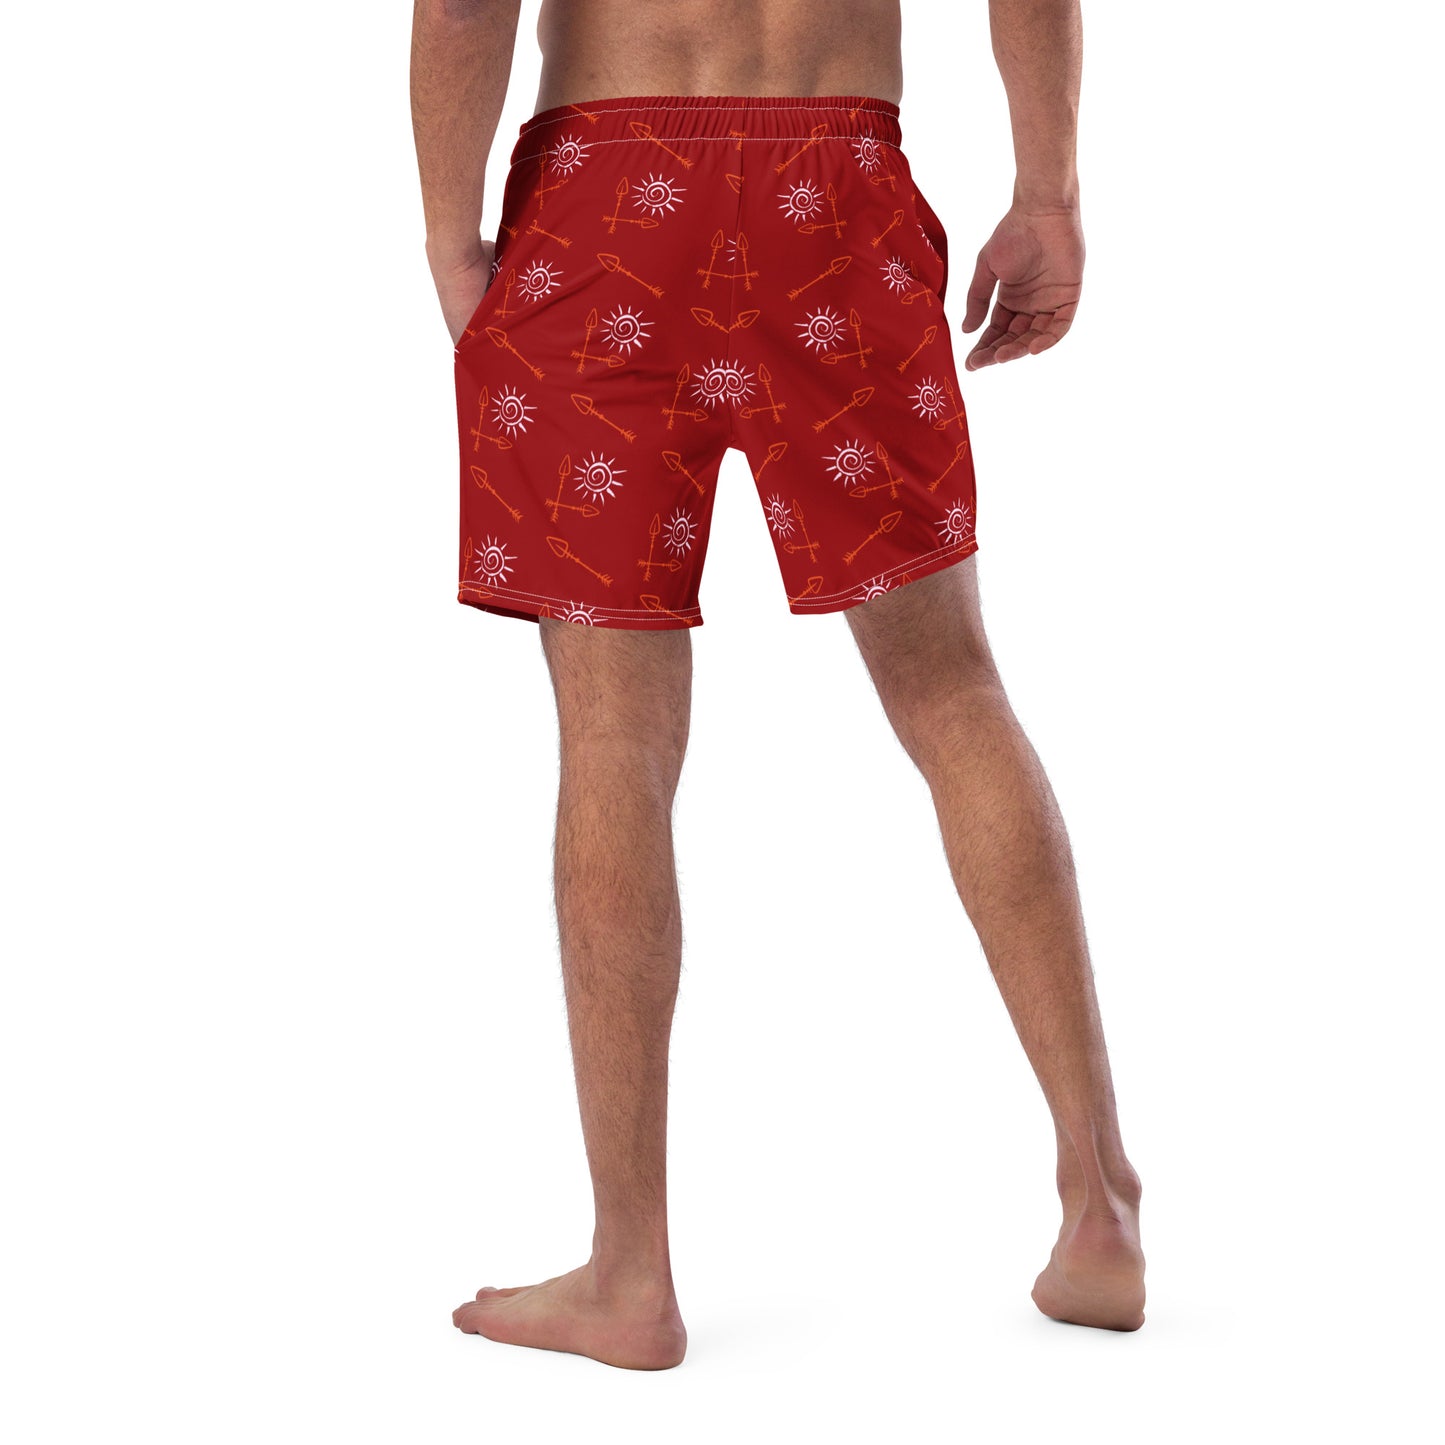 Akai Spade Recycled Men's swim trunks